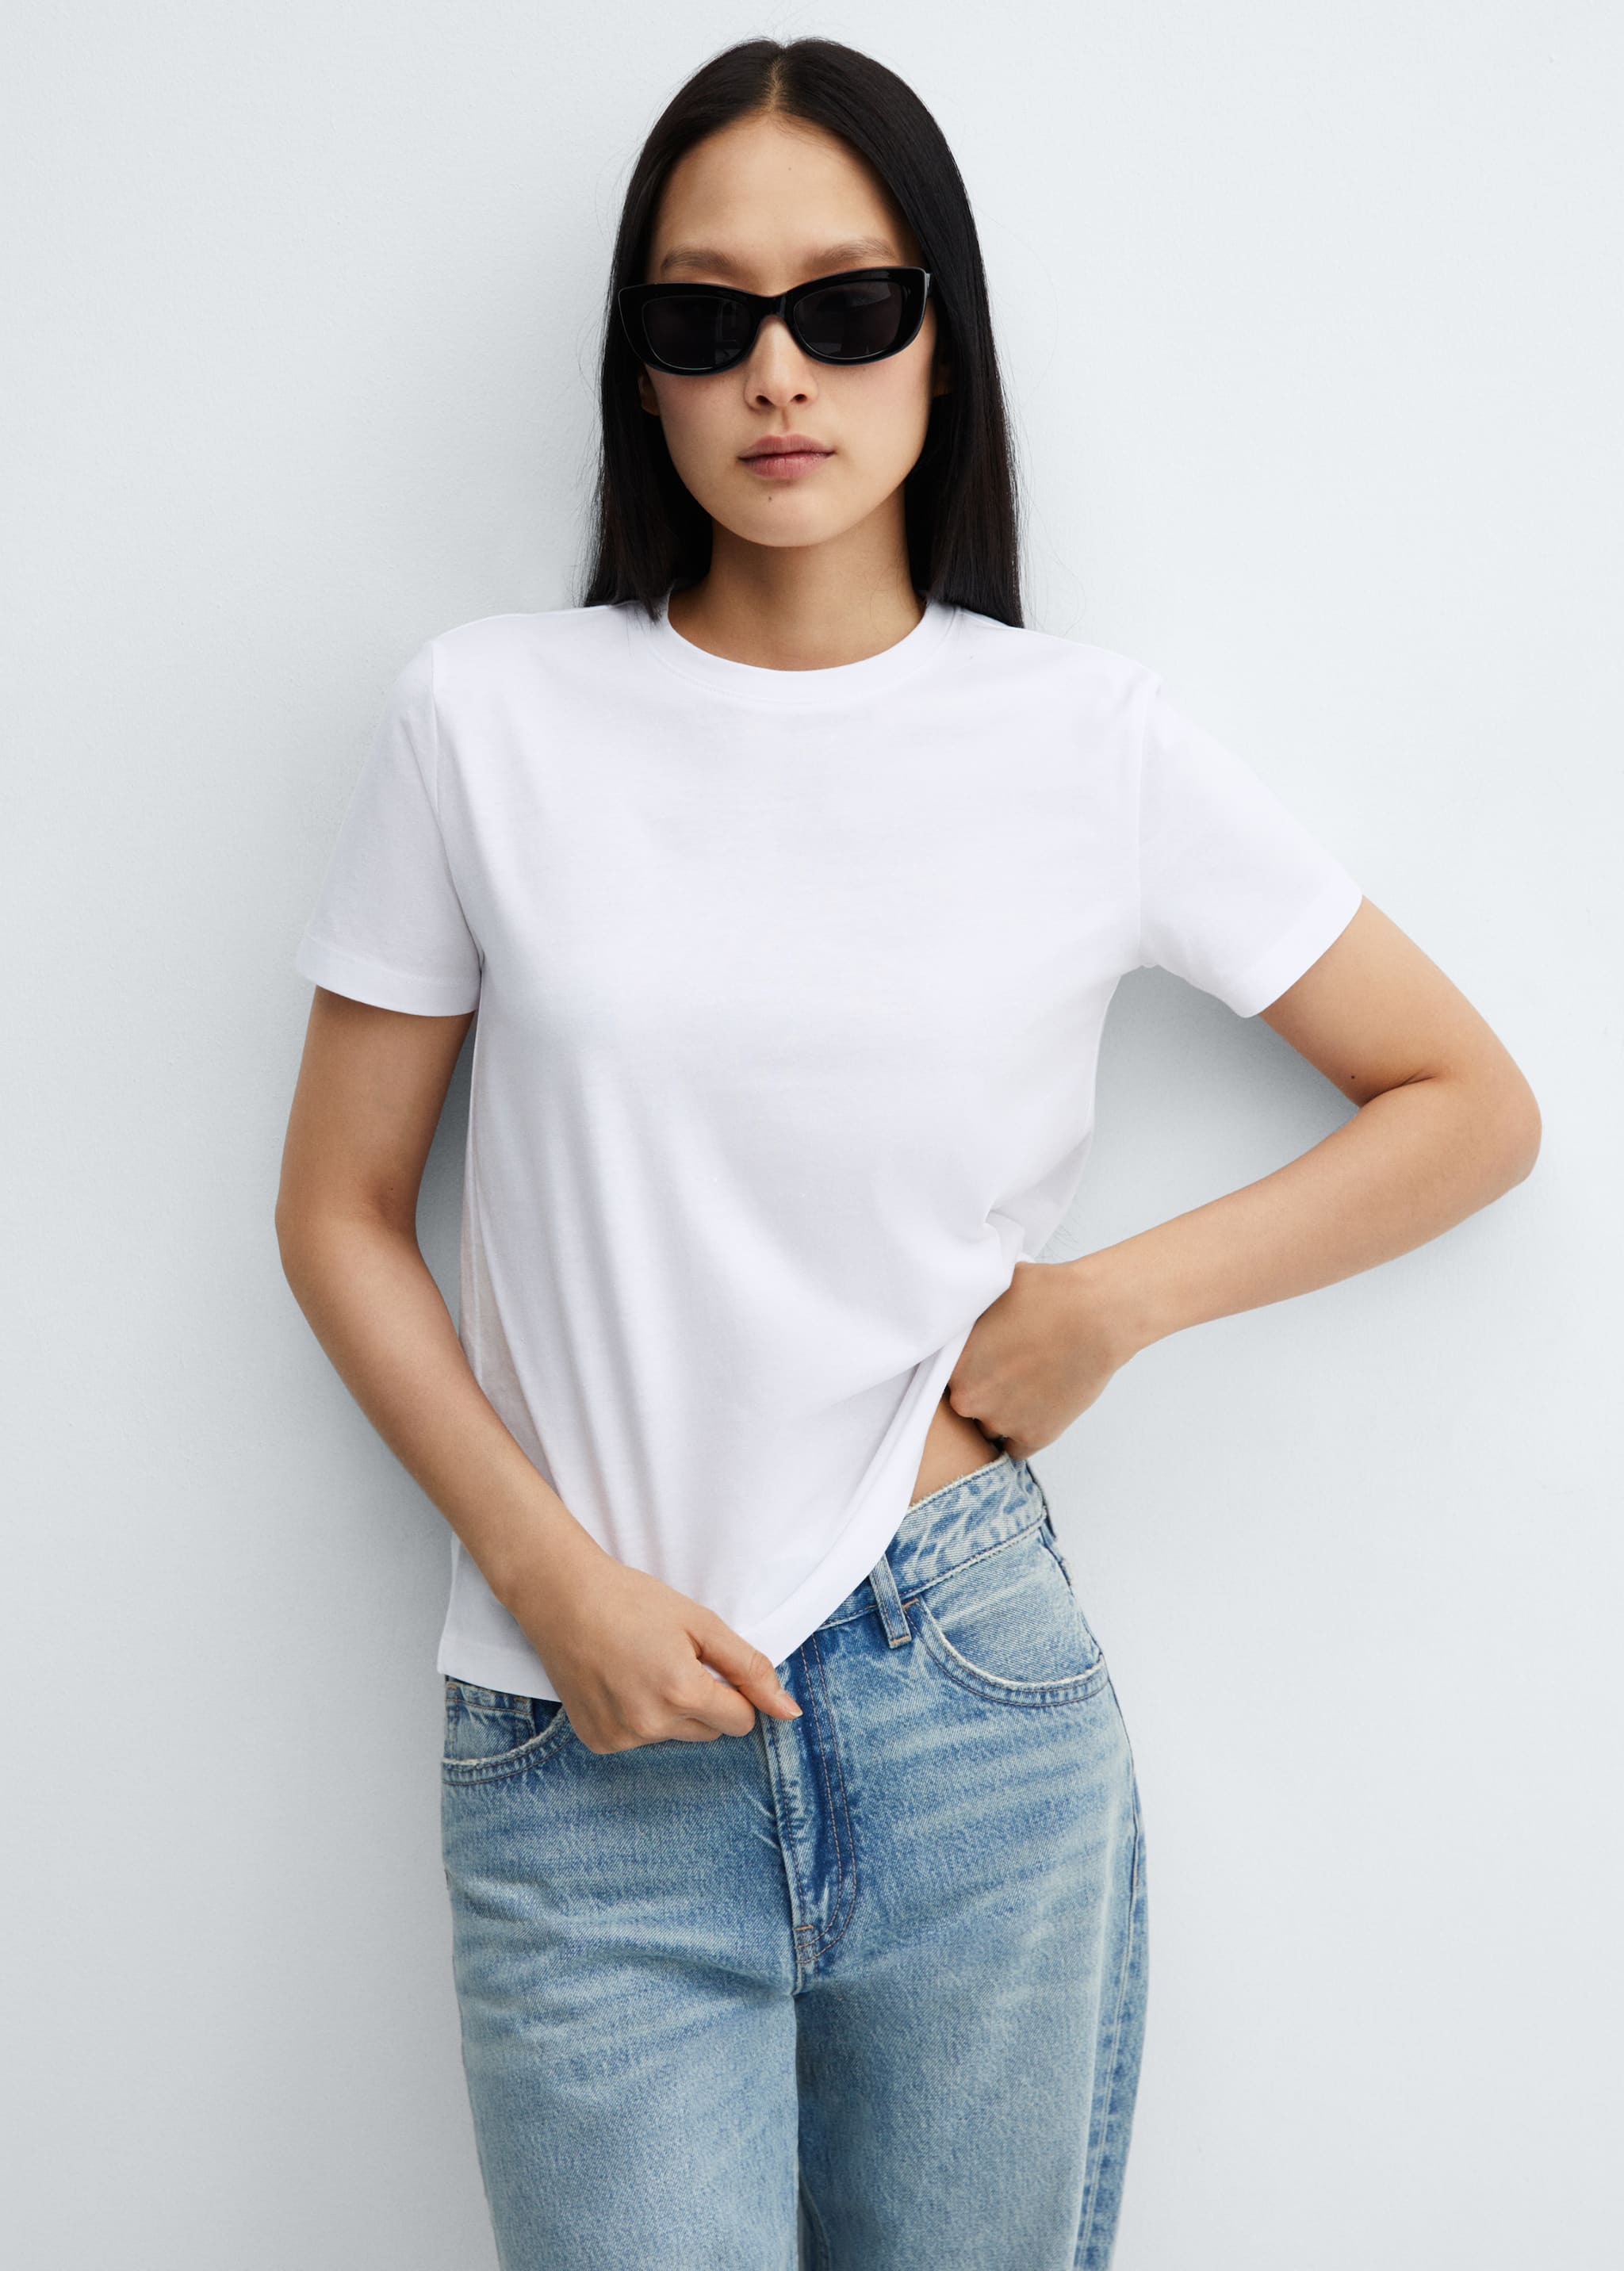 100% cotton T-shirt - Medium plane